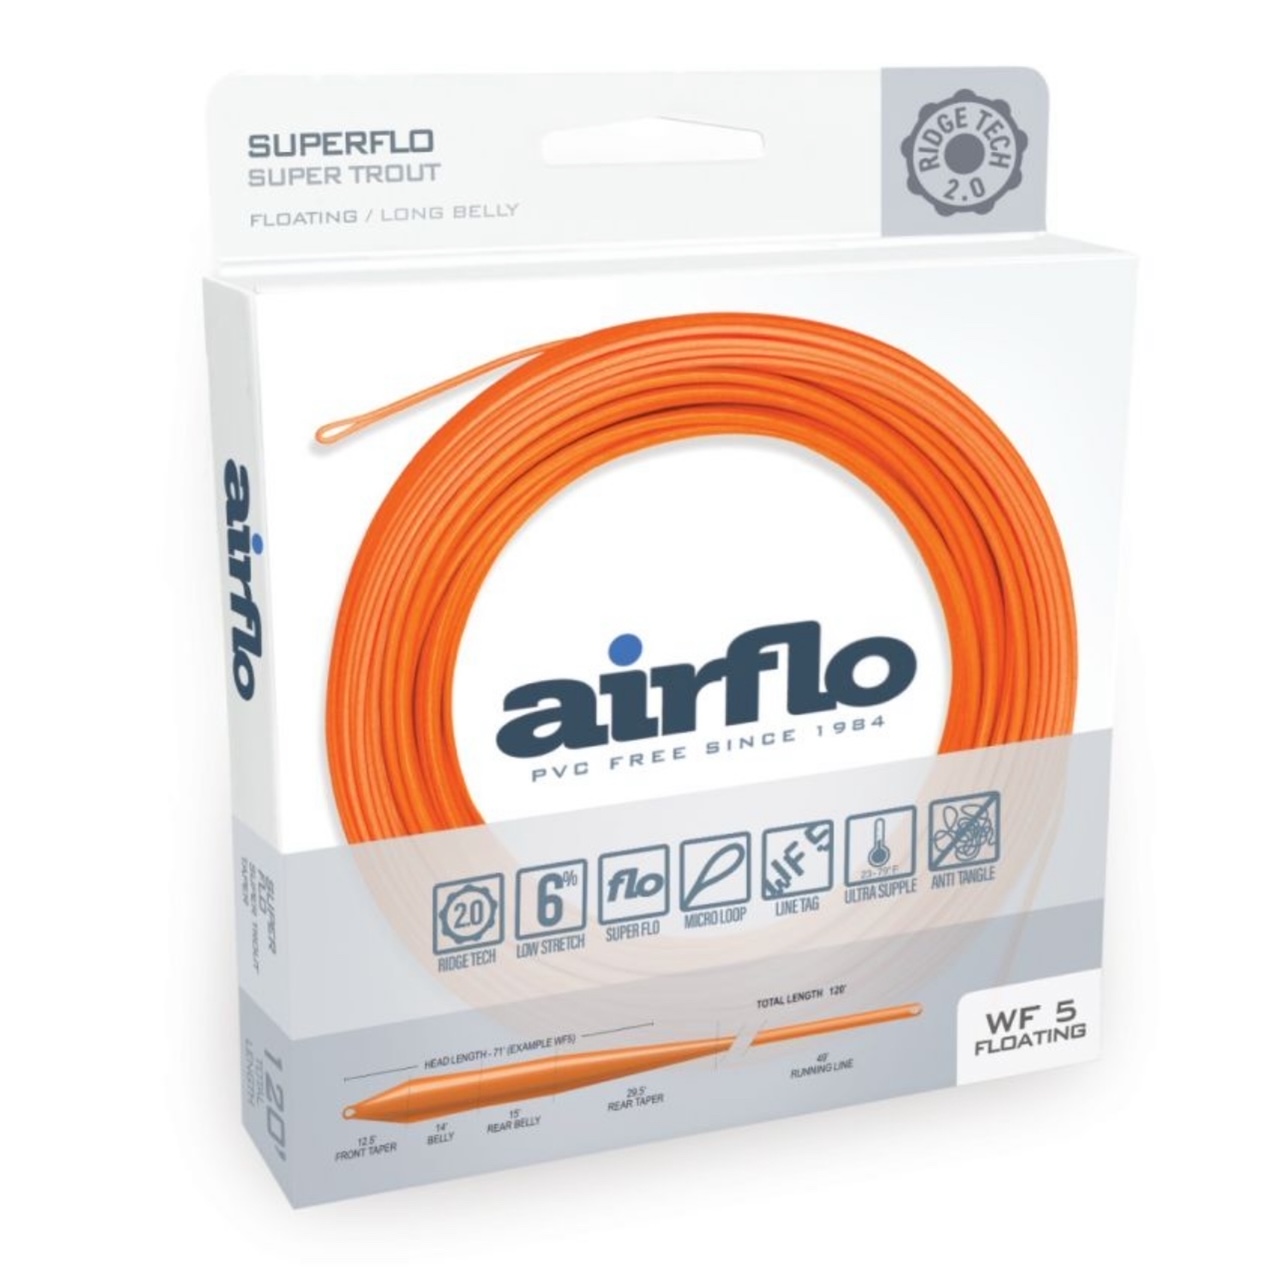 Airflo Superflo Ridge 2.0 Super Trout - WF5F